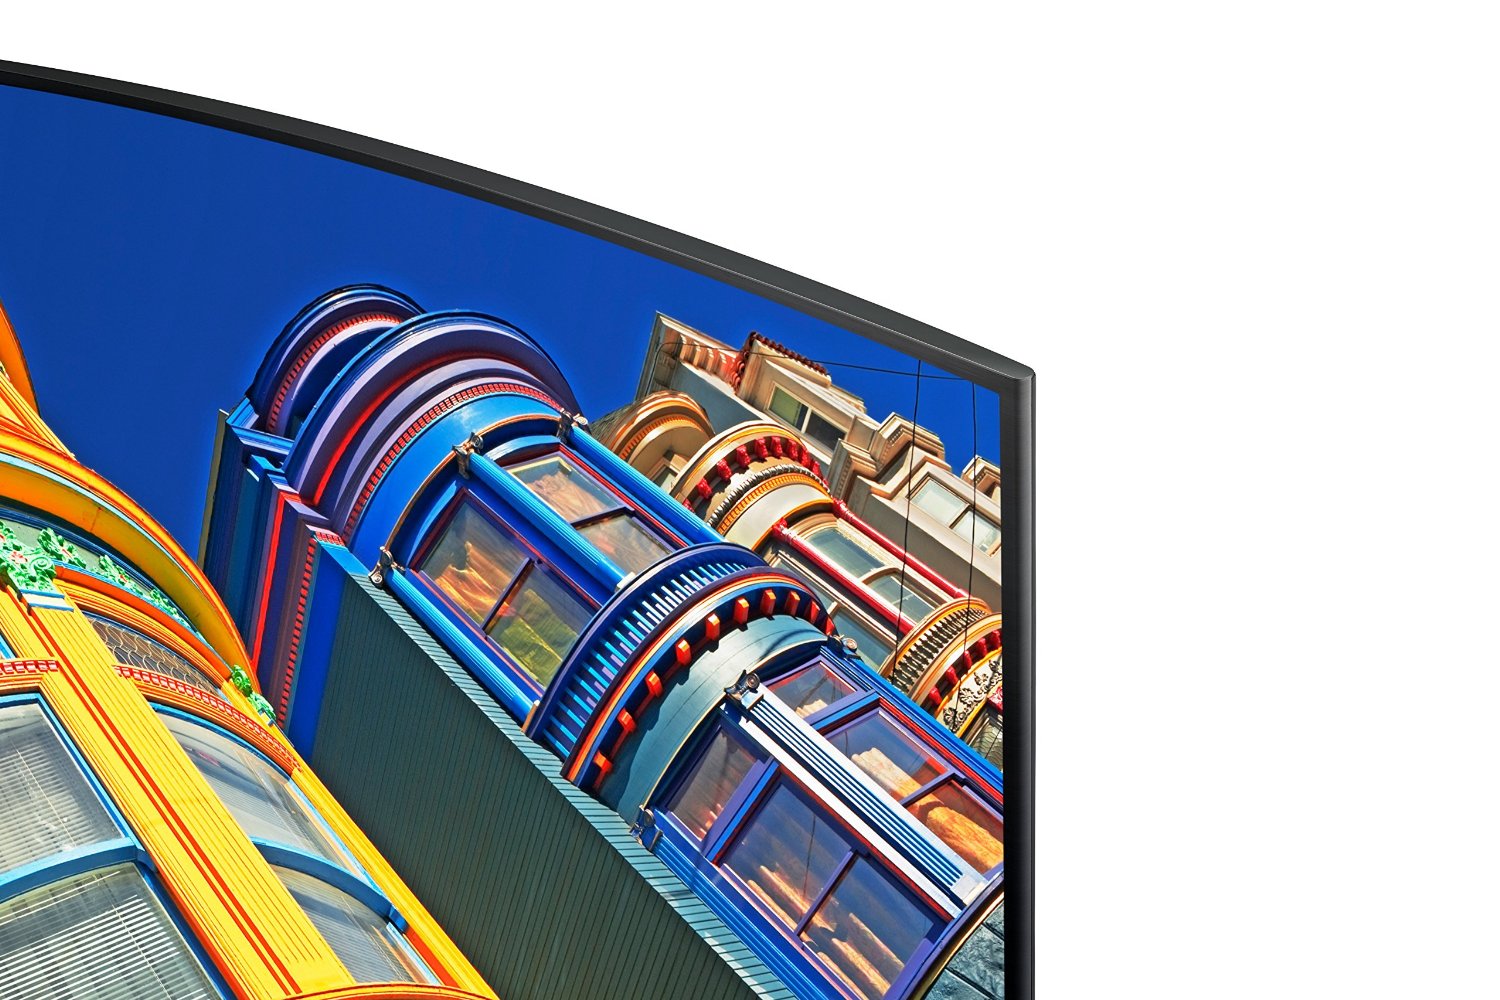 Samsung Un65ku6500 Curved 65 Inch 4k Ultra Hd Smart Led Tv 2016 Model N4 Free Image Download 8748